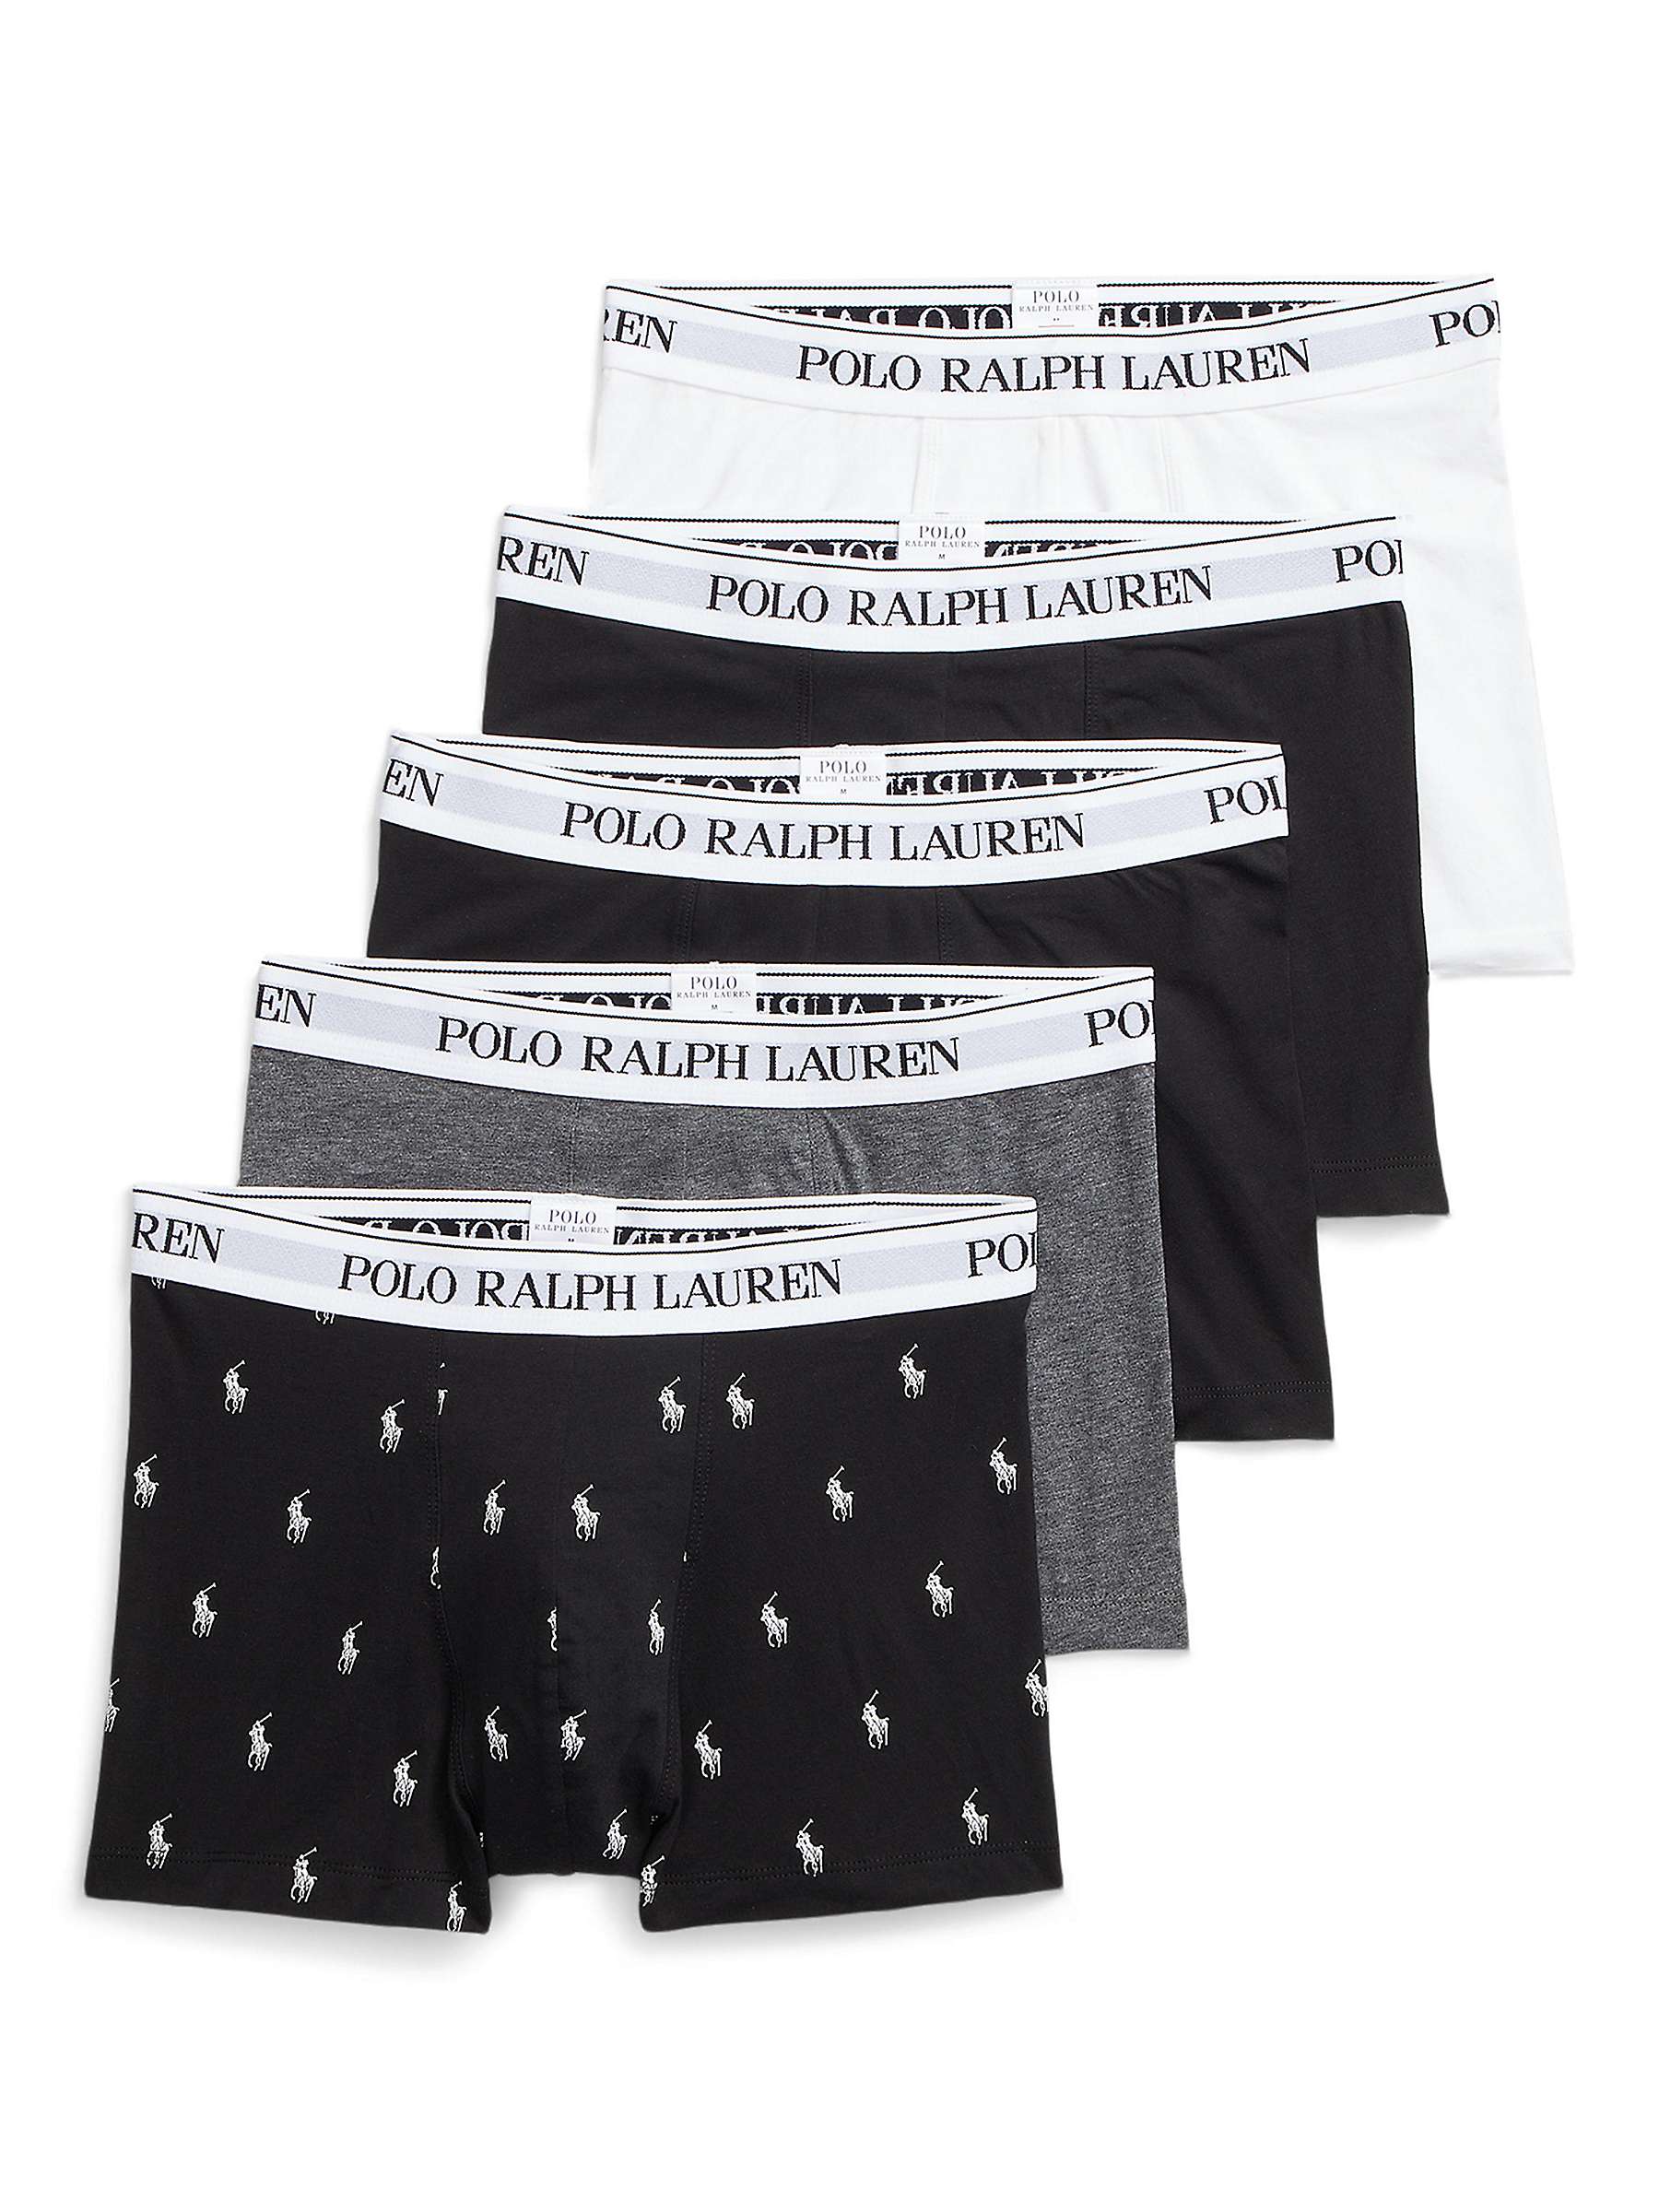 Buy Polo Ralph Lauren Plain Logo Cotton Stretch Trunks, Pack of 5, Mono Online at johnlewis.com